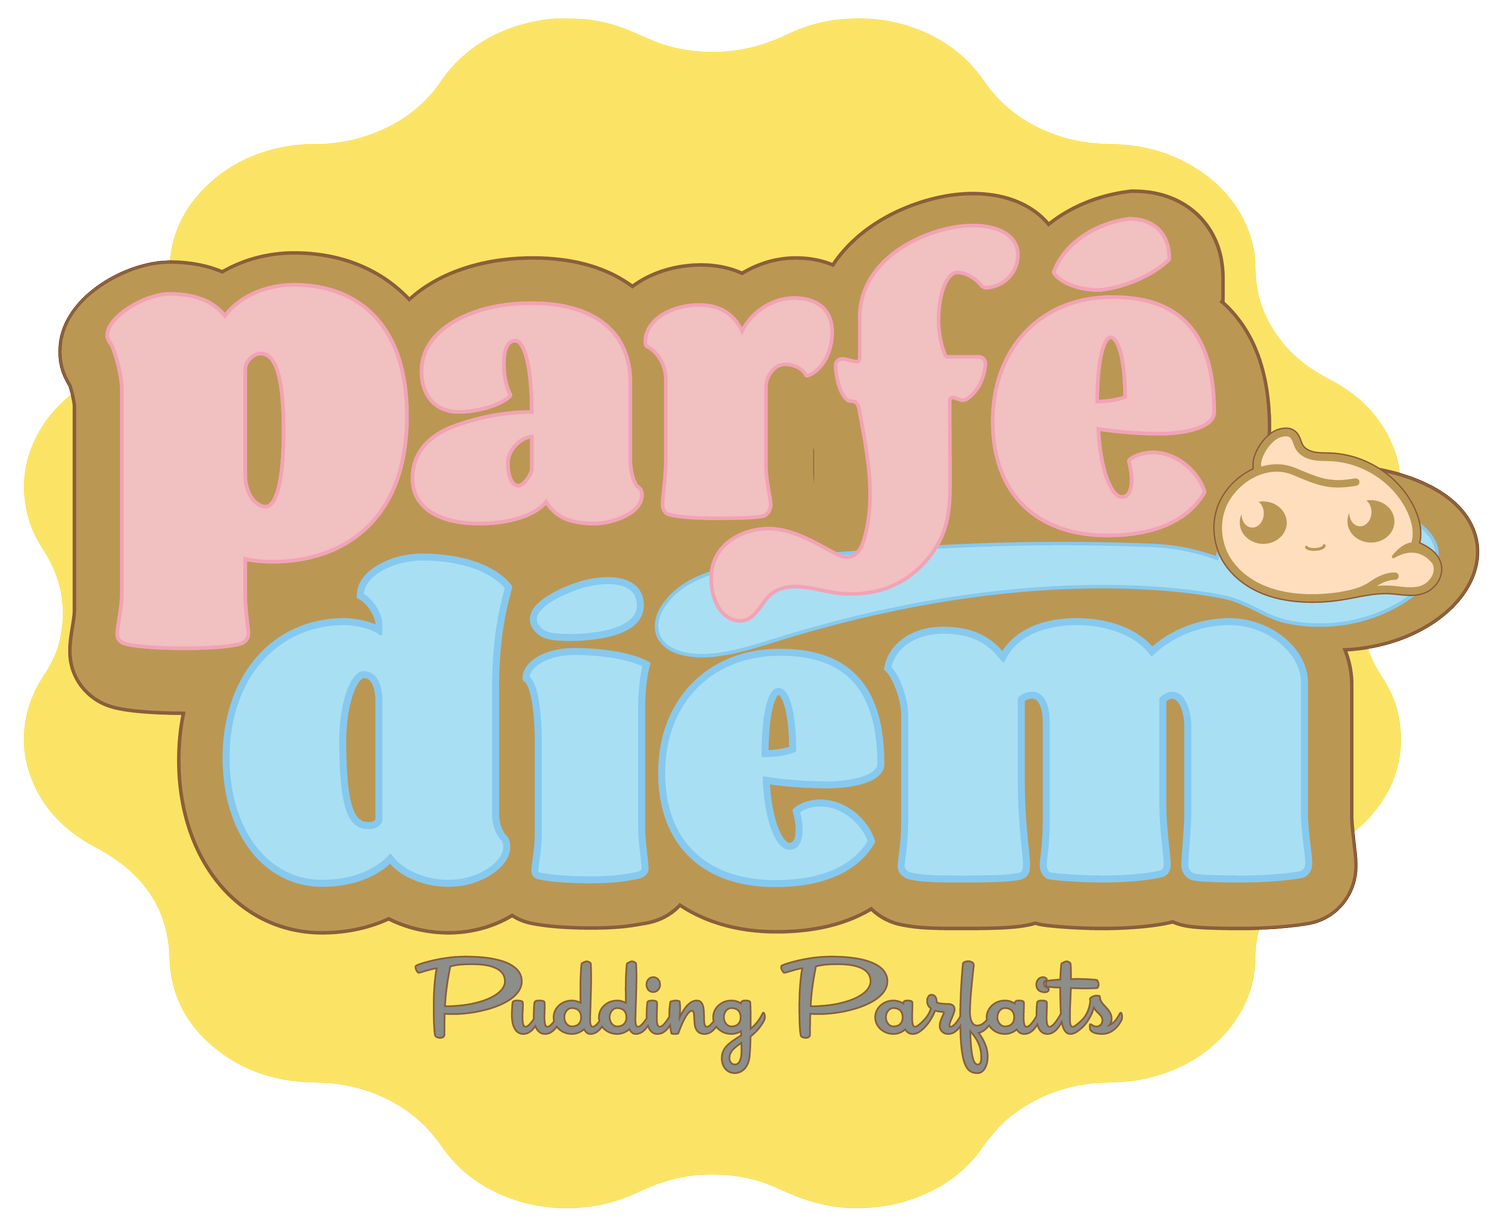 Parfé Diem Pudding Parfaits Dessert Bakery, Catering